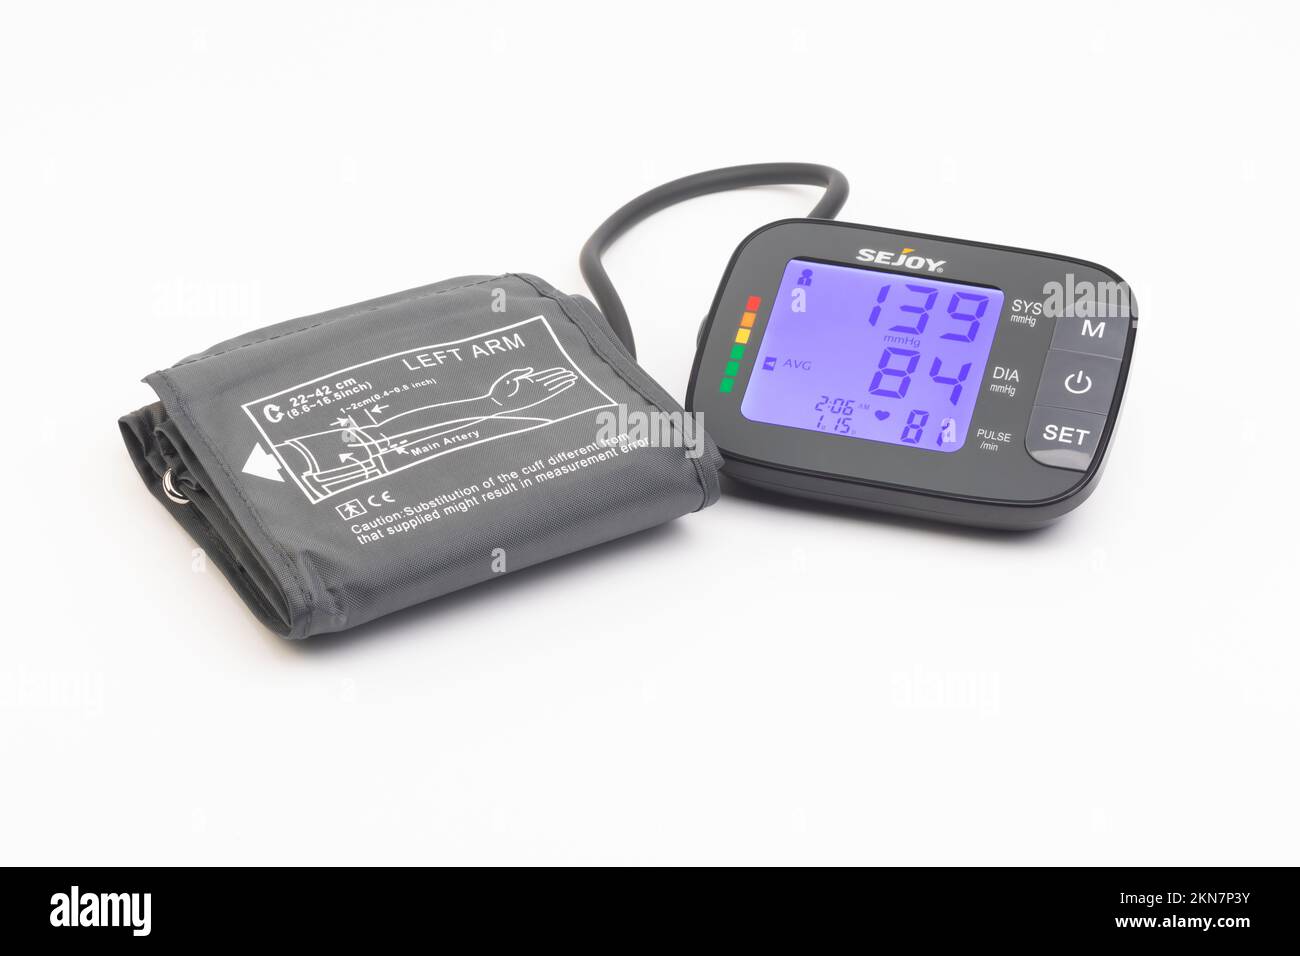 Ein Joytech Healthcare Sejoy Blutdruckmessgerät und Armmanschette  Stockfotografie - Alamy